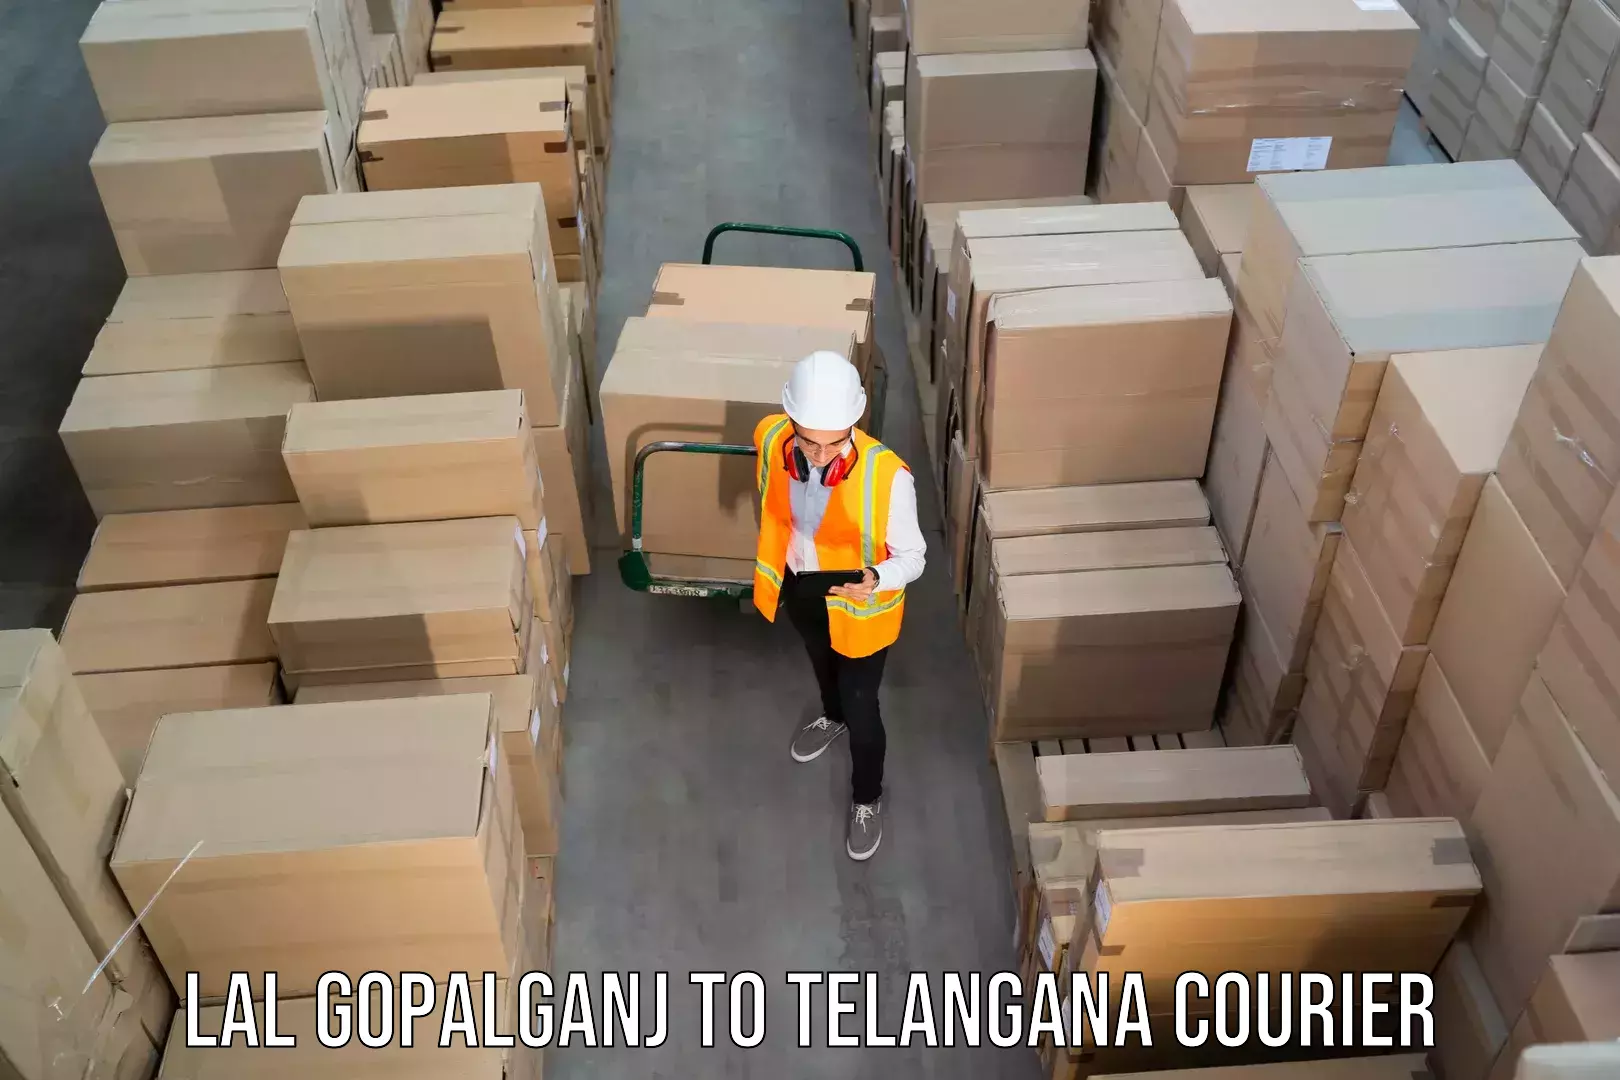 Reliable courier services Lal Gopalganj to Kamalapur